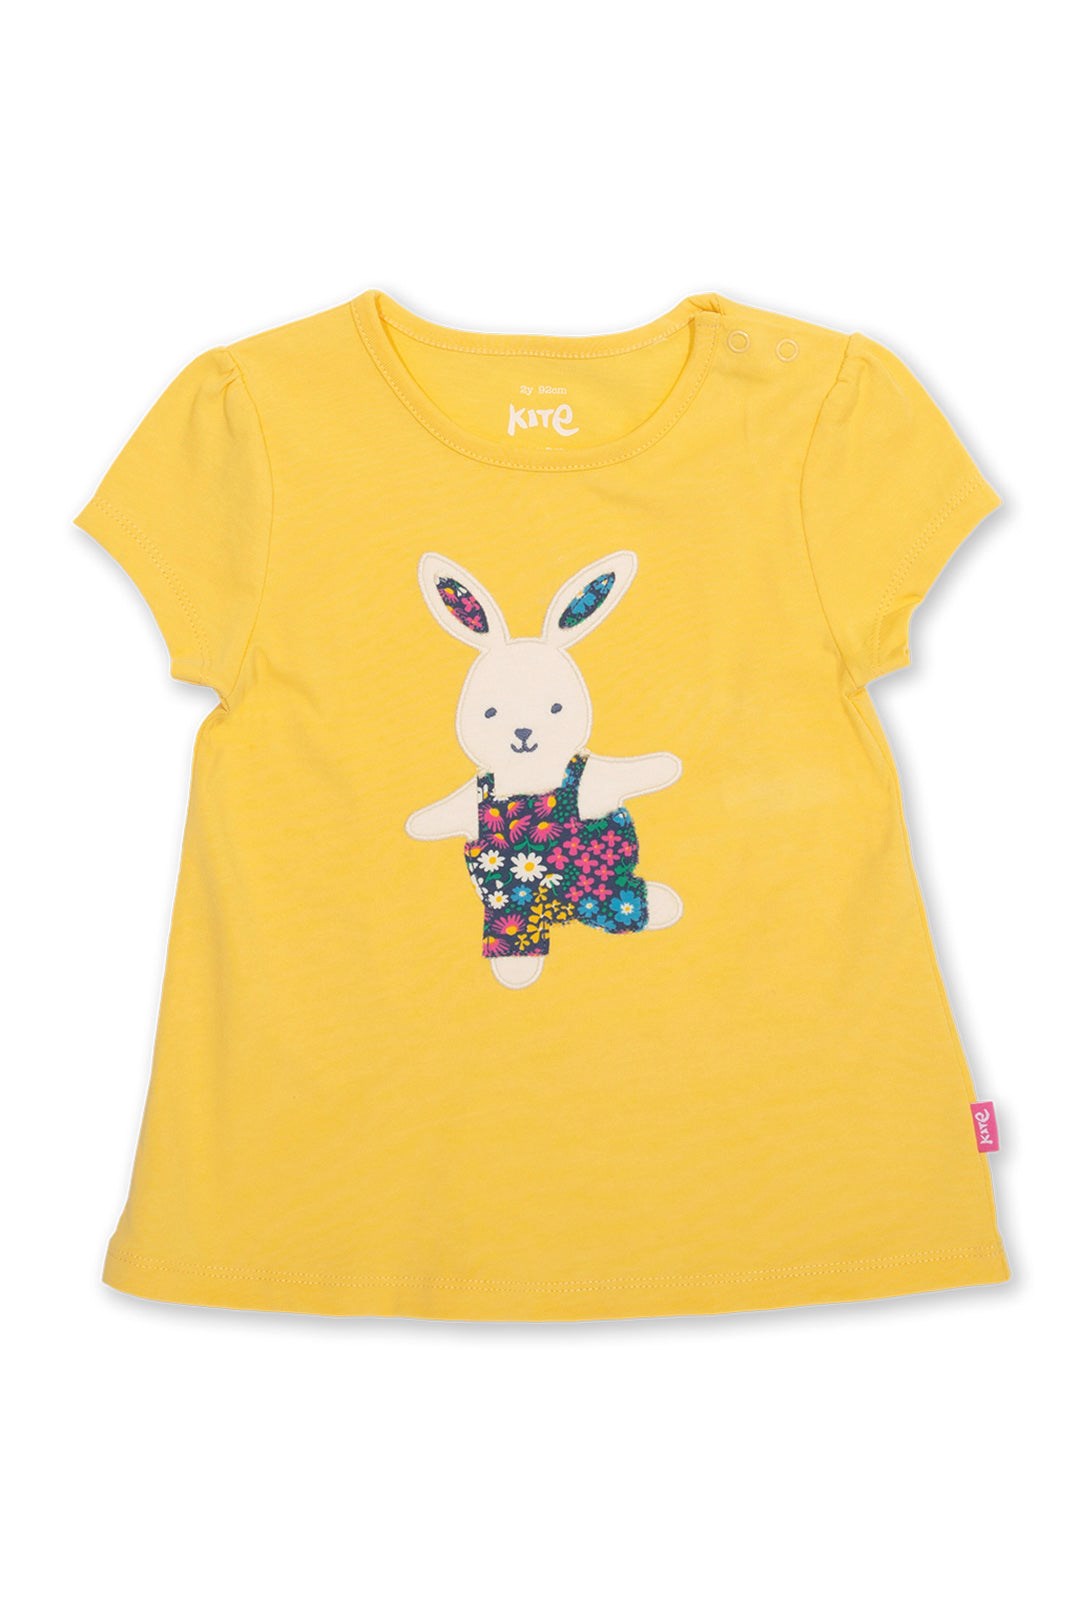 Baby/Kids Organic Cotton Applique Tunic -